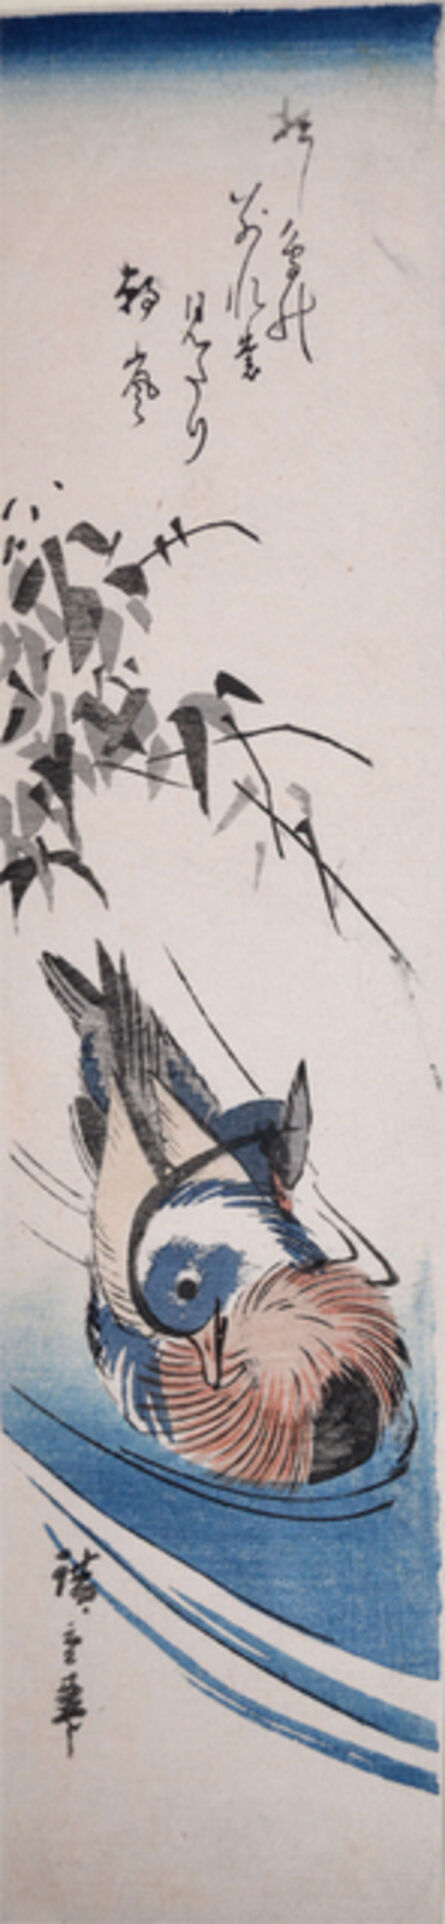 Utagawa Hiroshige (Andō Hiroshige), ‘Mandarin Ducks’, ca. 1840